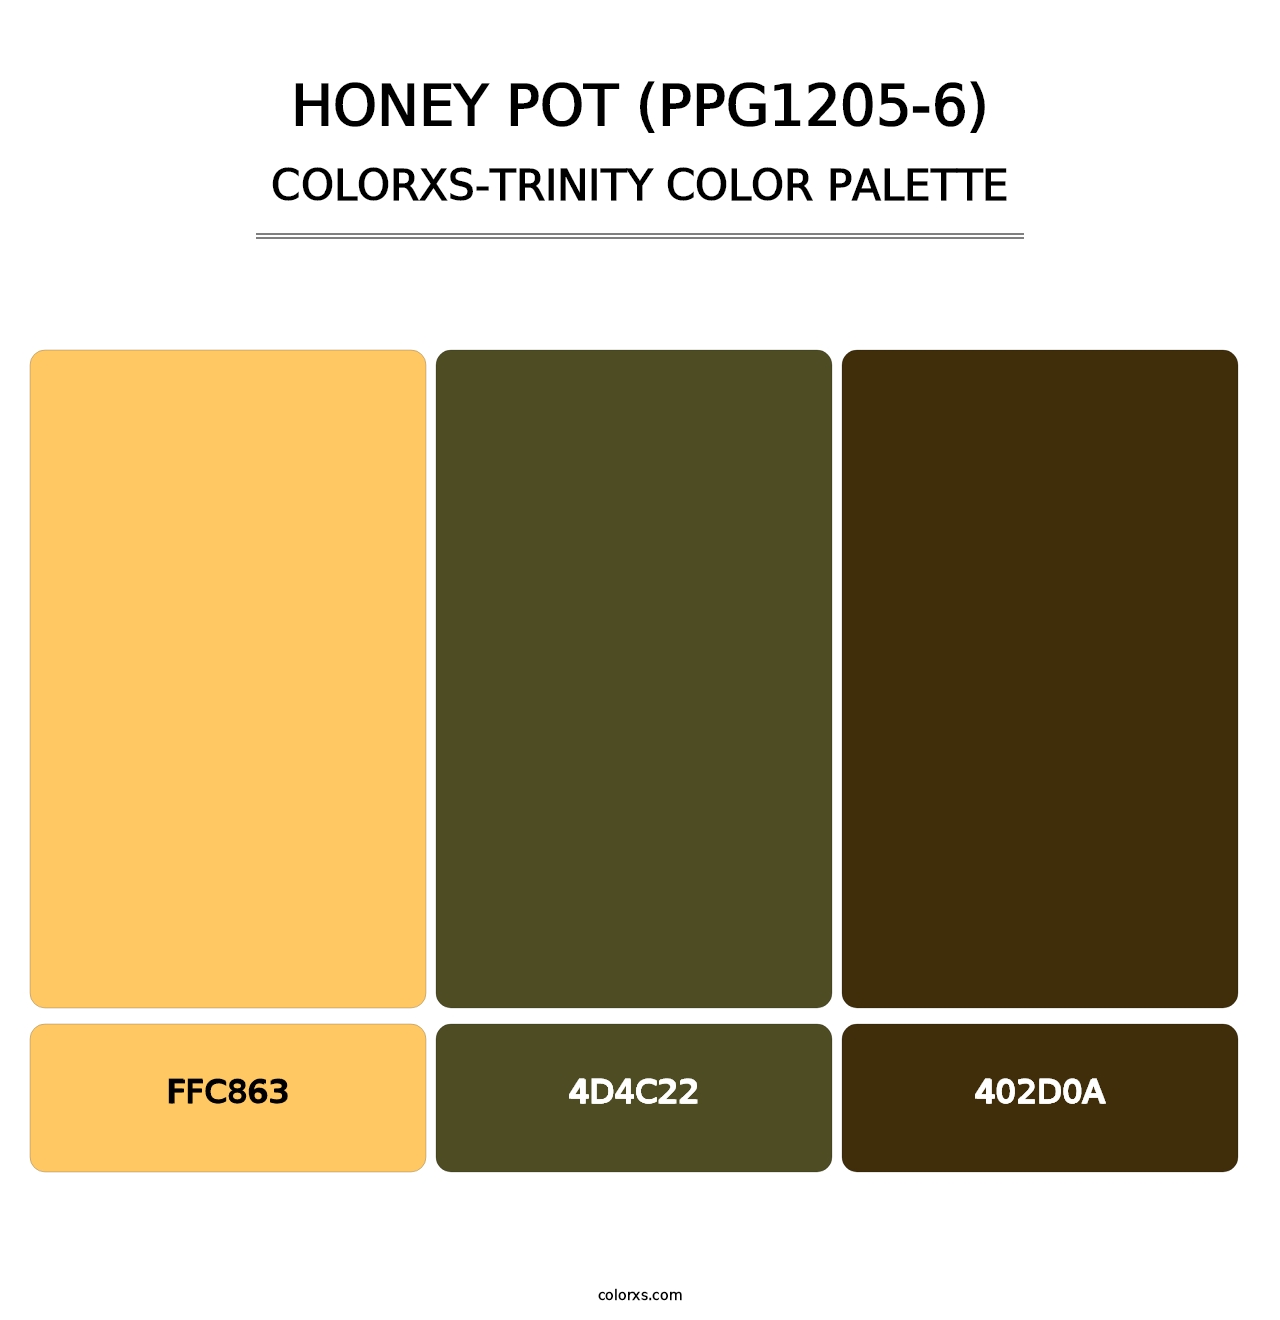 Honey Pot (PPG1205-6) - Colorxs Trinity Palette